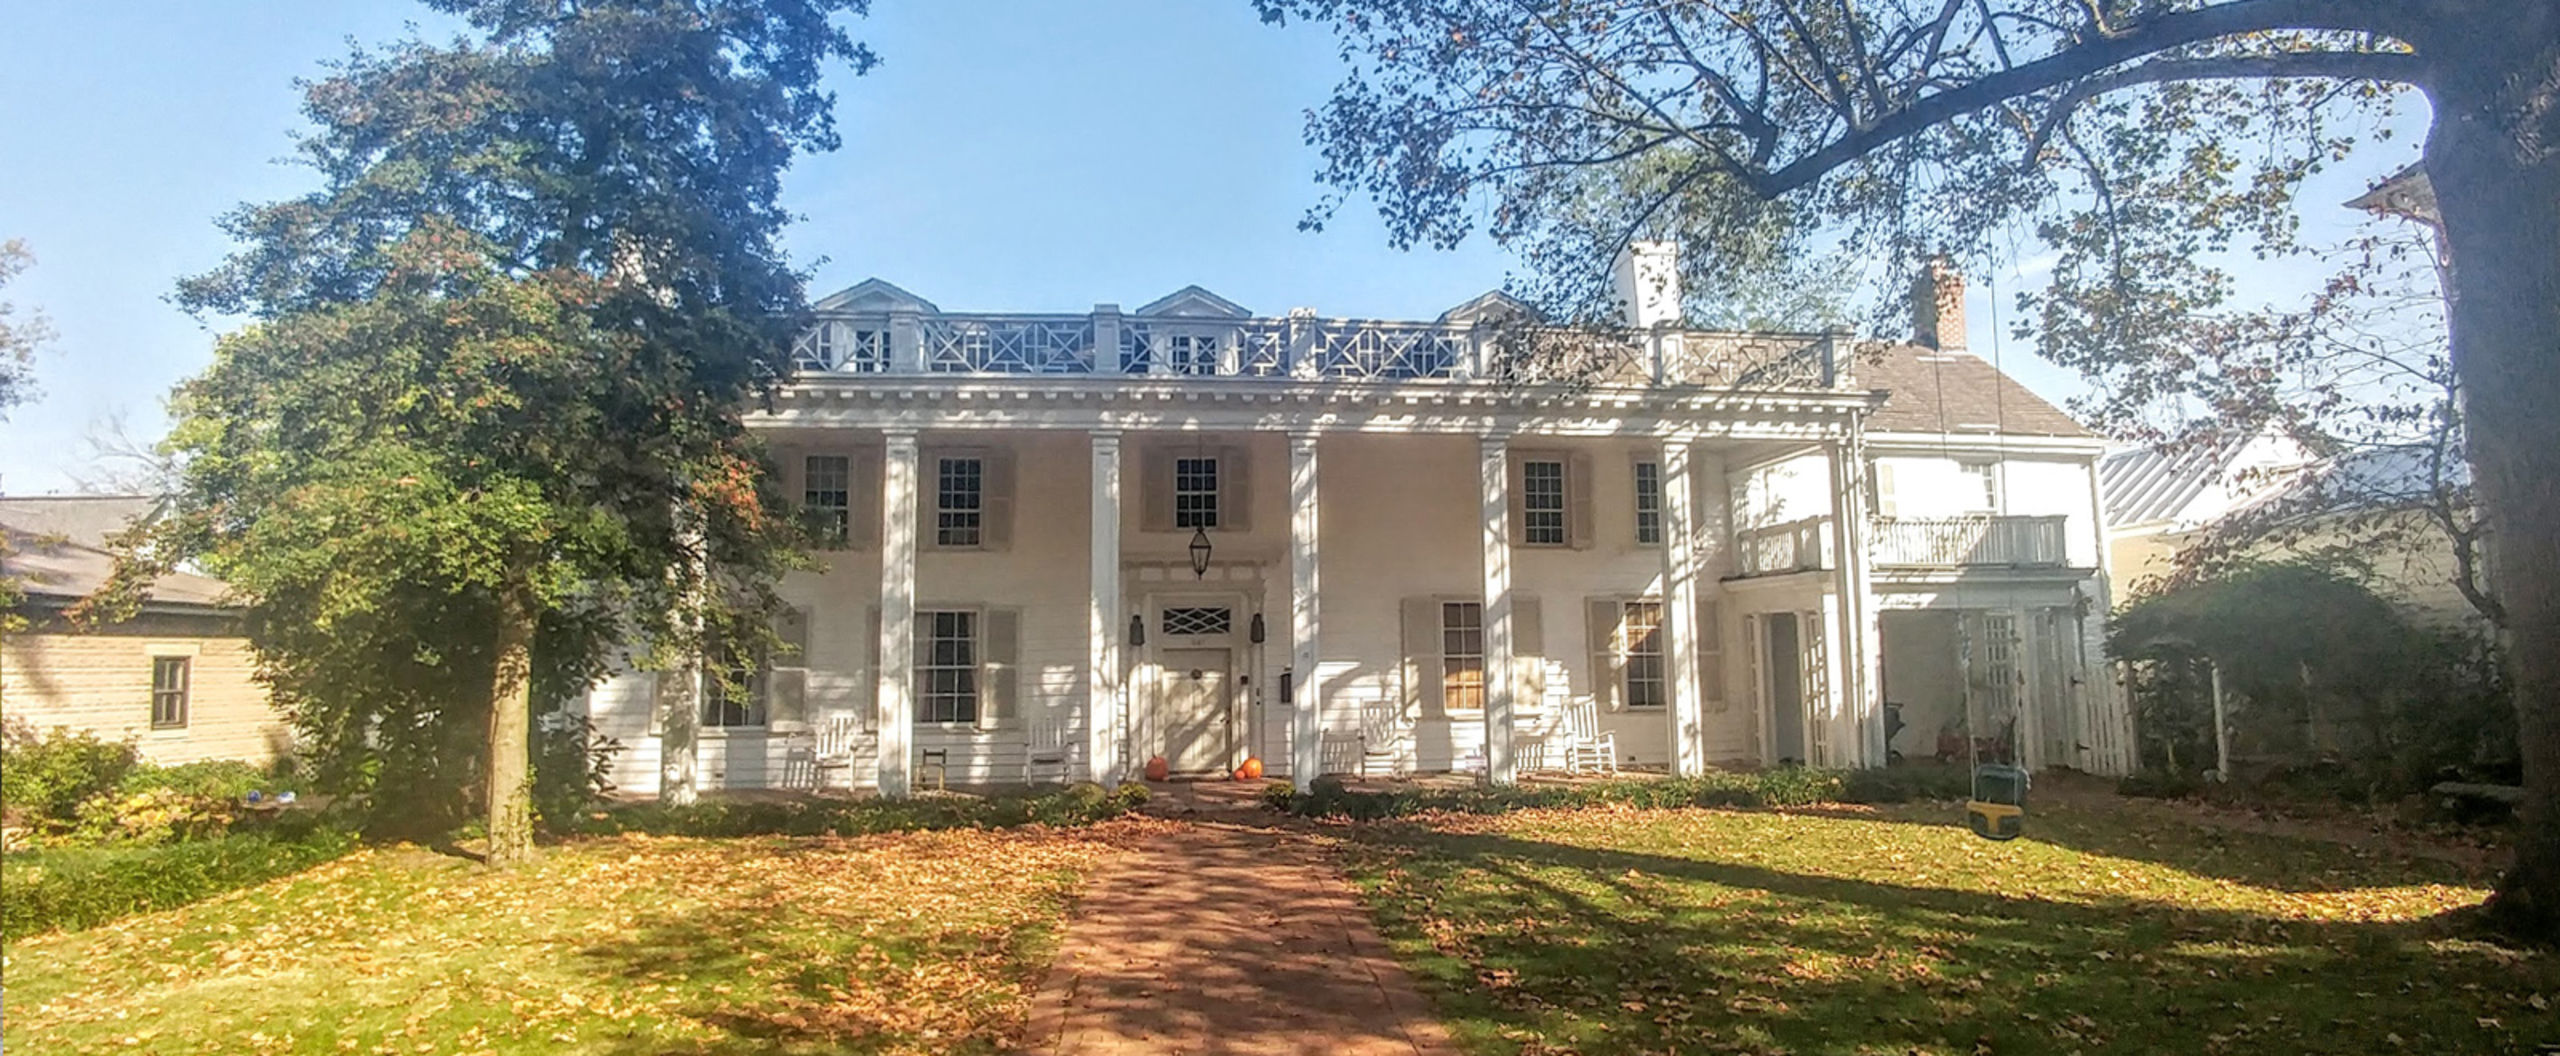 The Charles Dick House - Under Contract - Fredericksburg's oldest Historic Landmark.